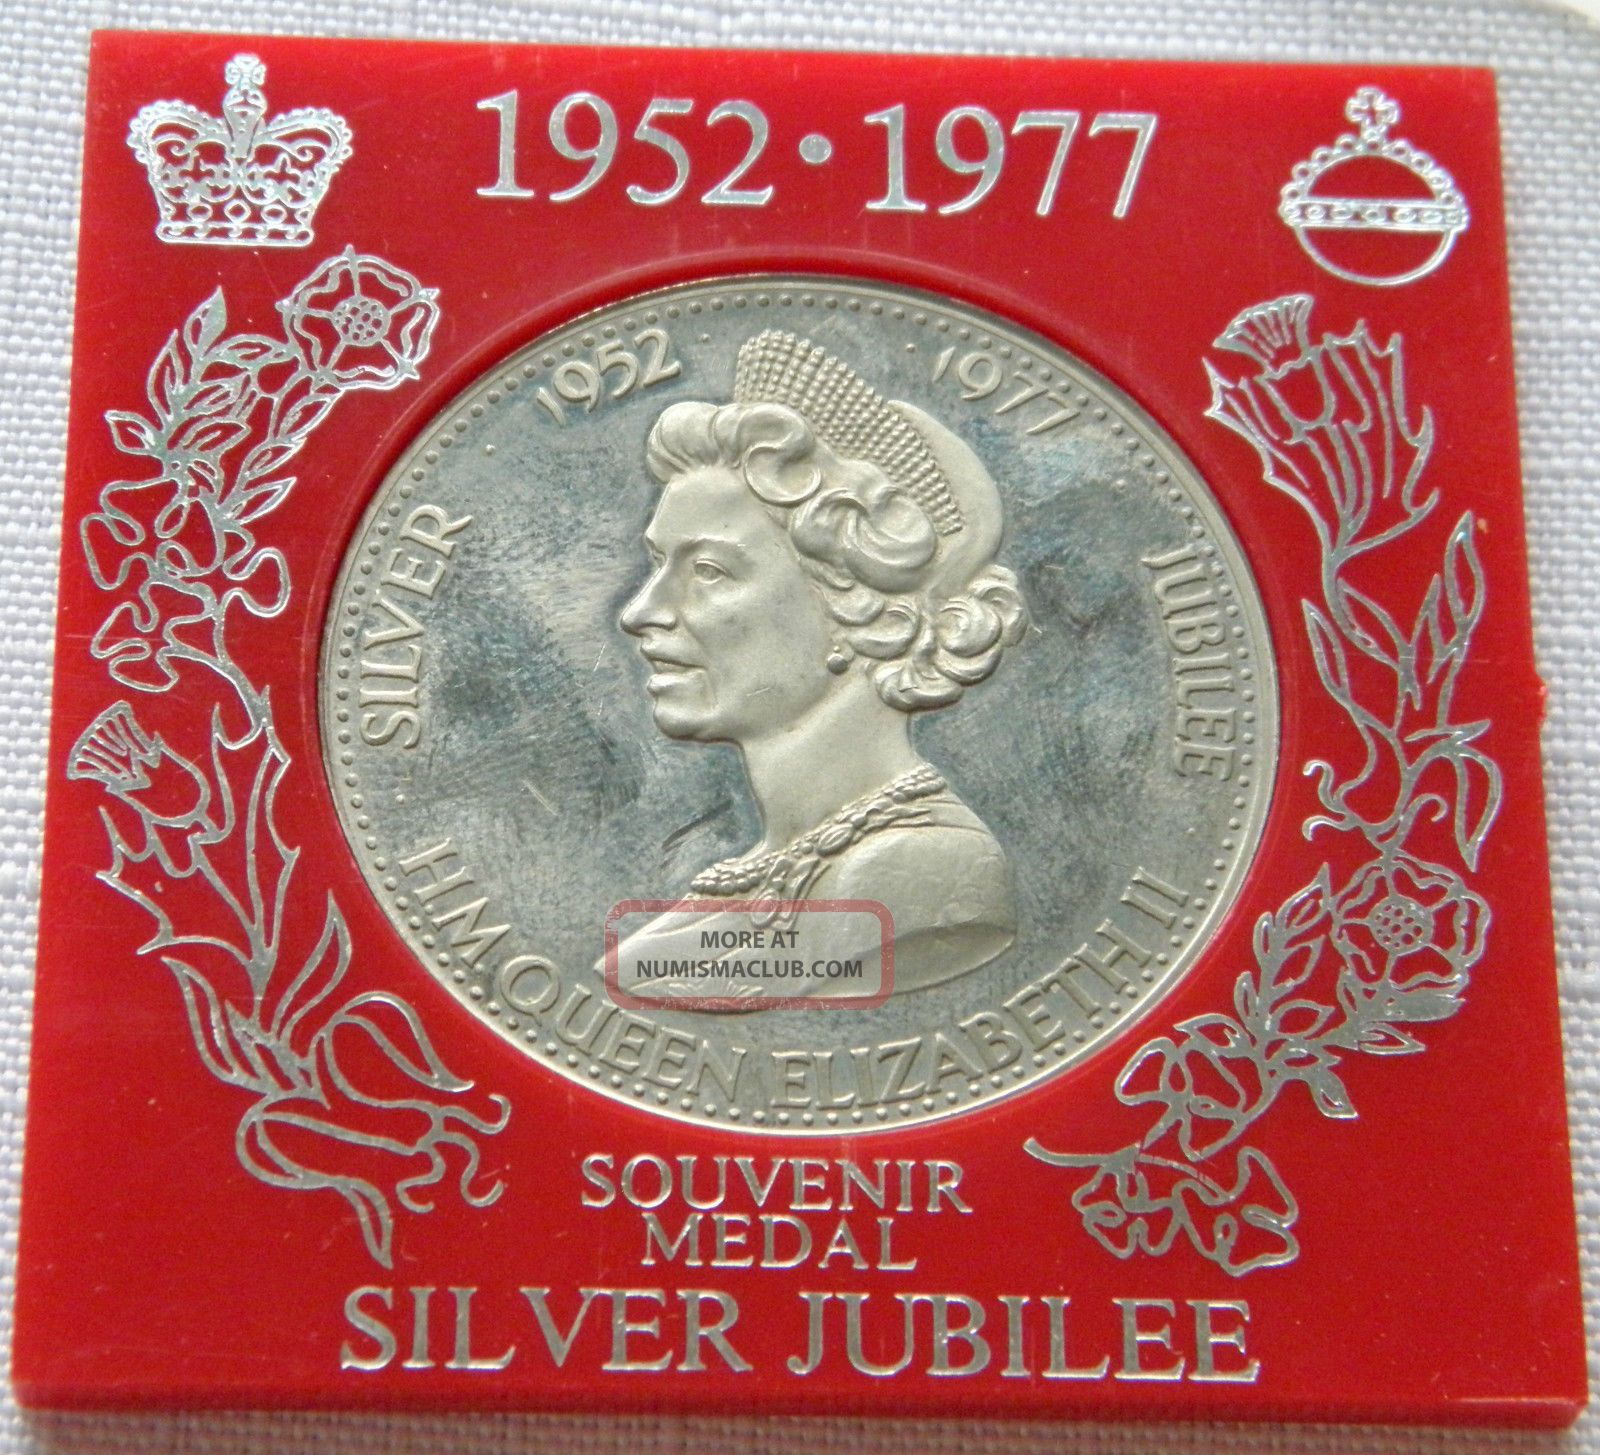 H.  M.  Queen Elizabeth Ii Silver Jubilee Souvenir Medal 1952 - 1977 In Plastic Case Exonumia photo